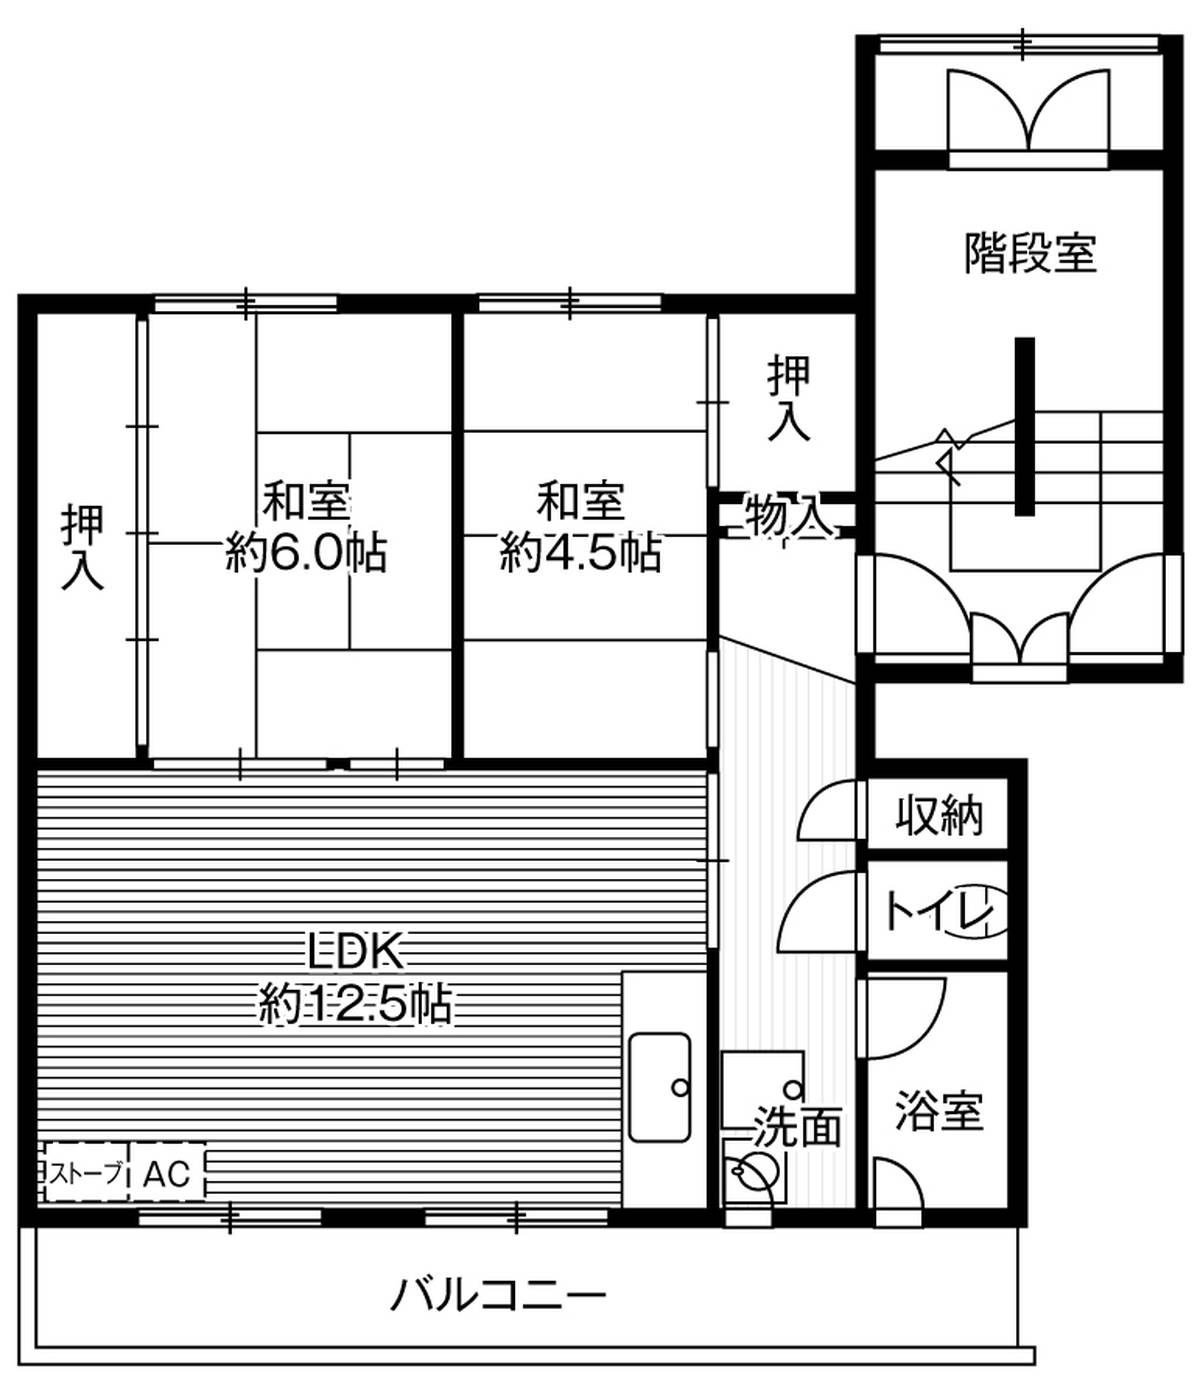 2LDK floorplan of Village House Shiomigaoka in Otaru-shi